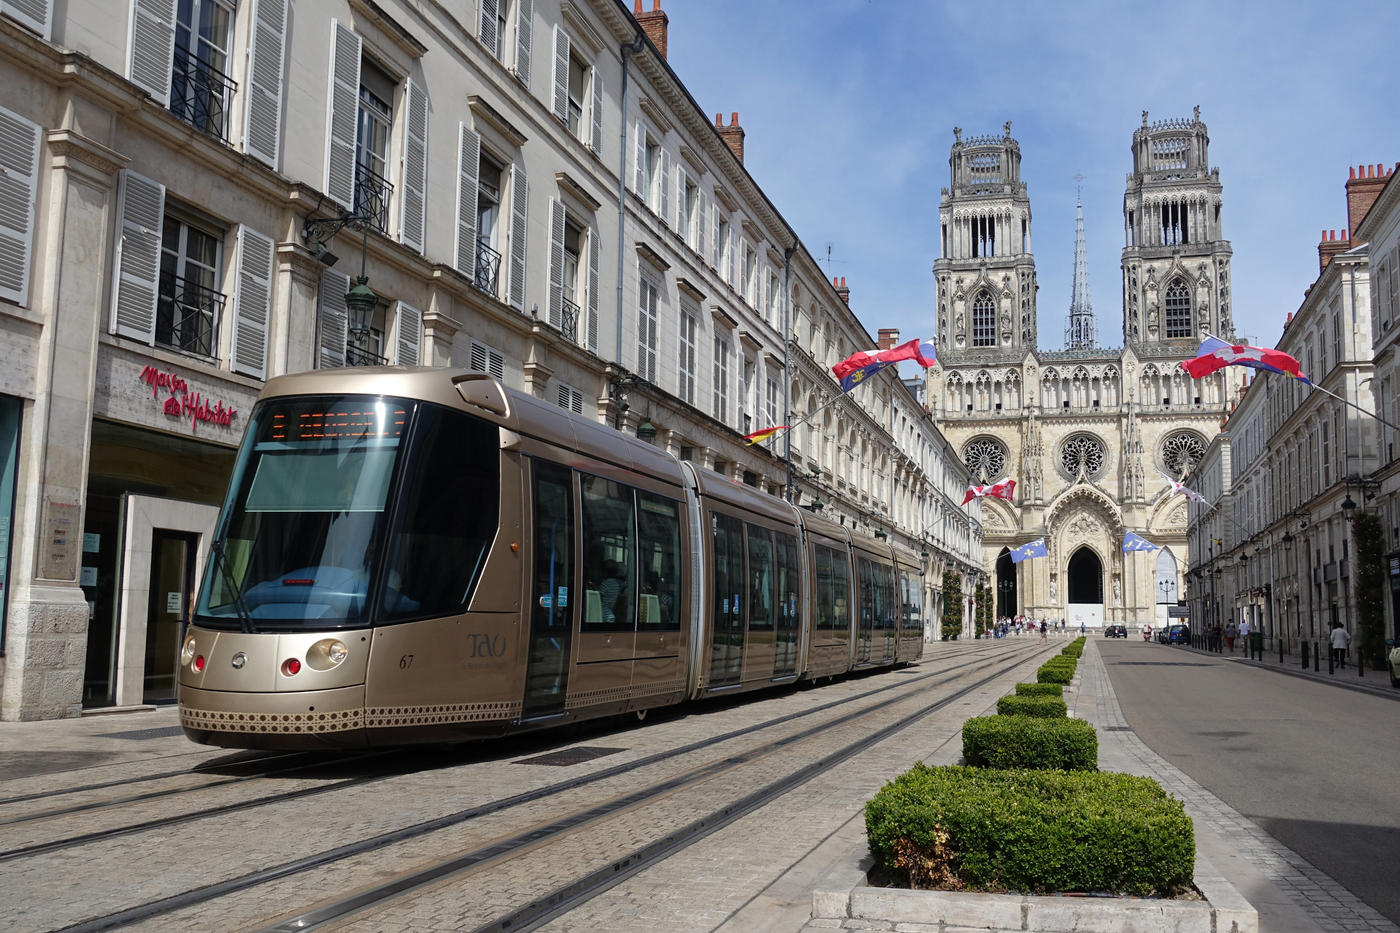 Orléans: History meets modernity